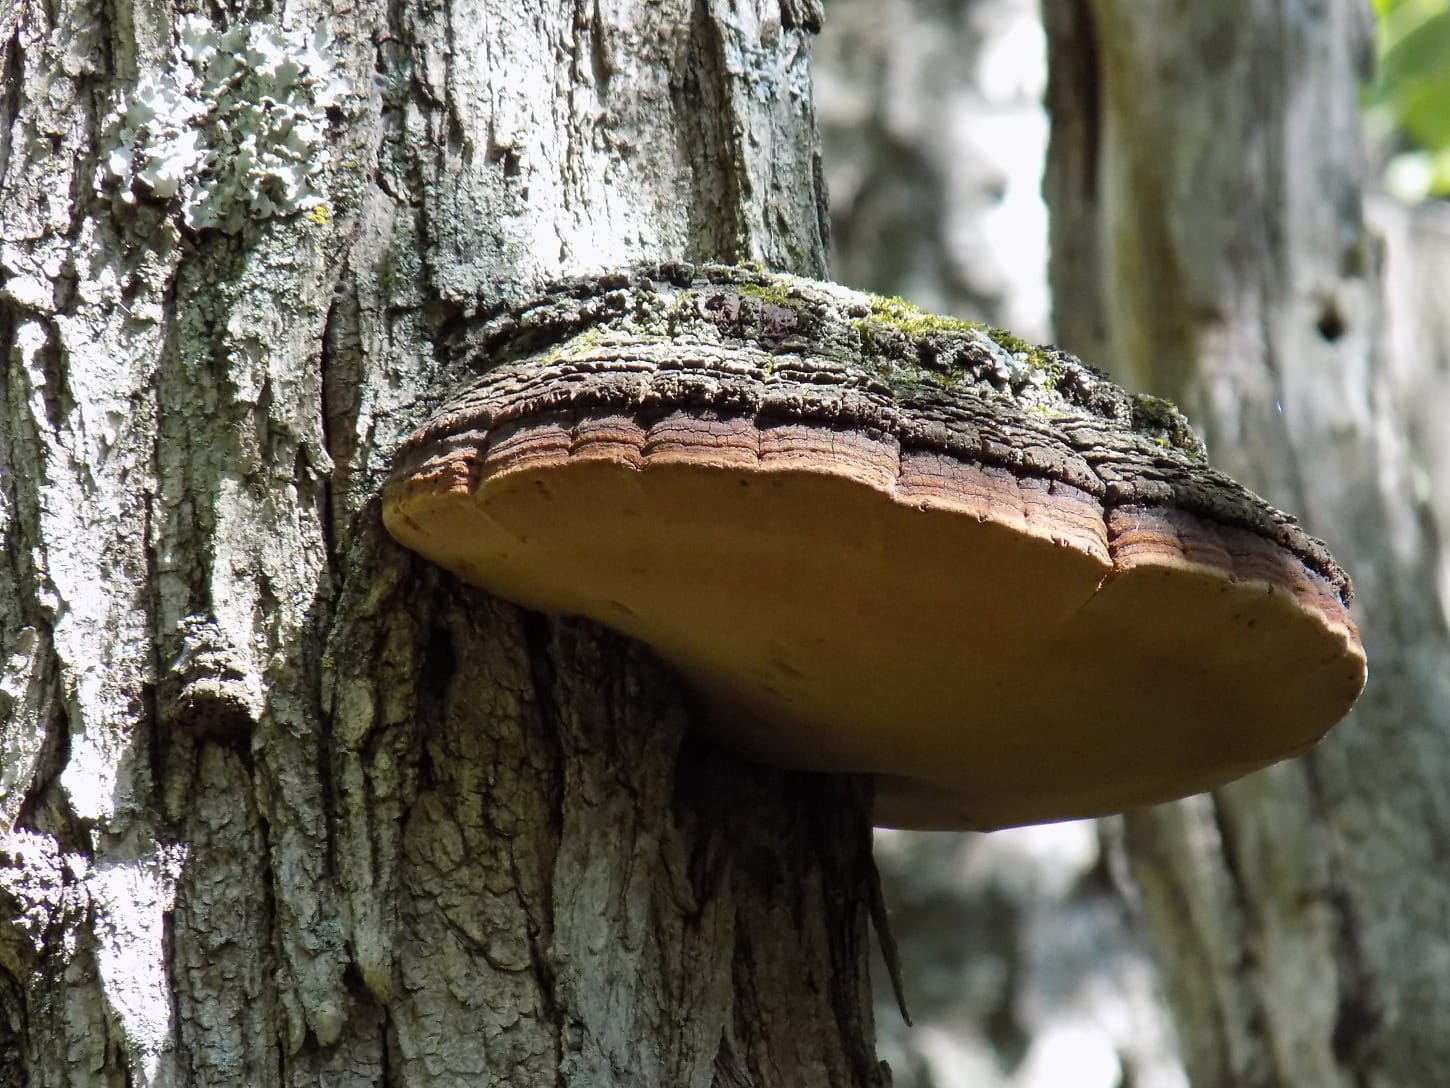 parasite, mushroom, bark, close-up, tree trunk, fungus, organism, forest